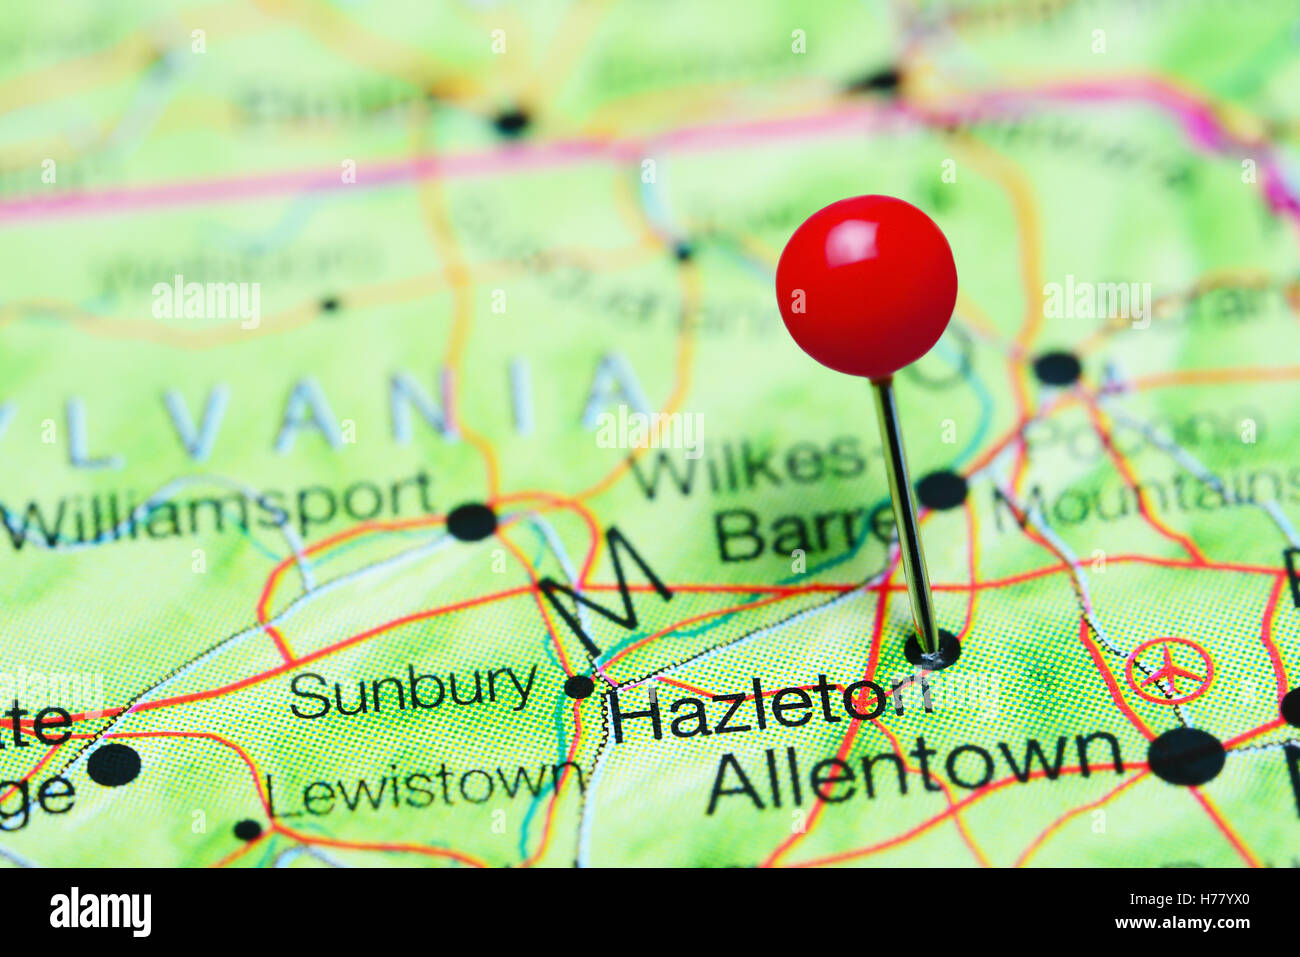 Hazleton pinned on a map of Pennsylvania, USA Stock Photo